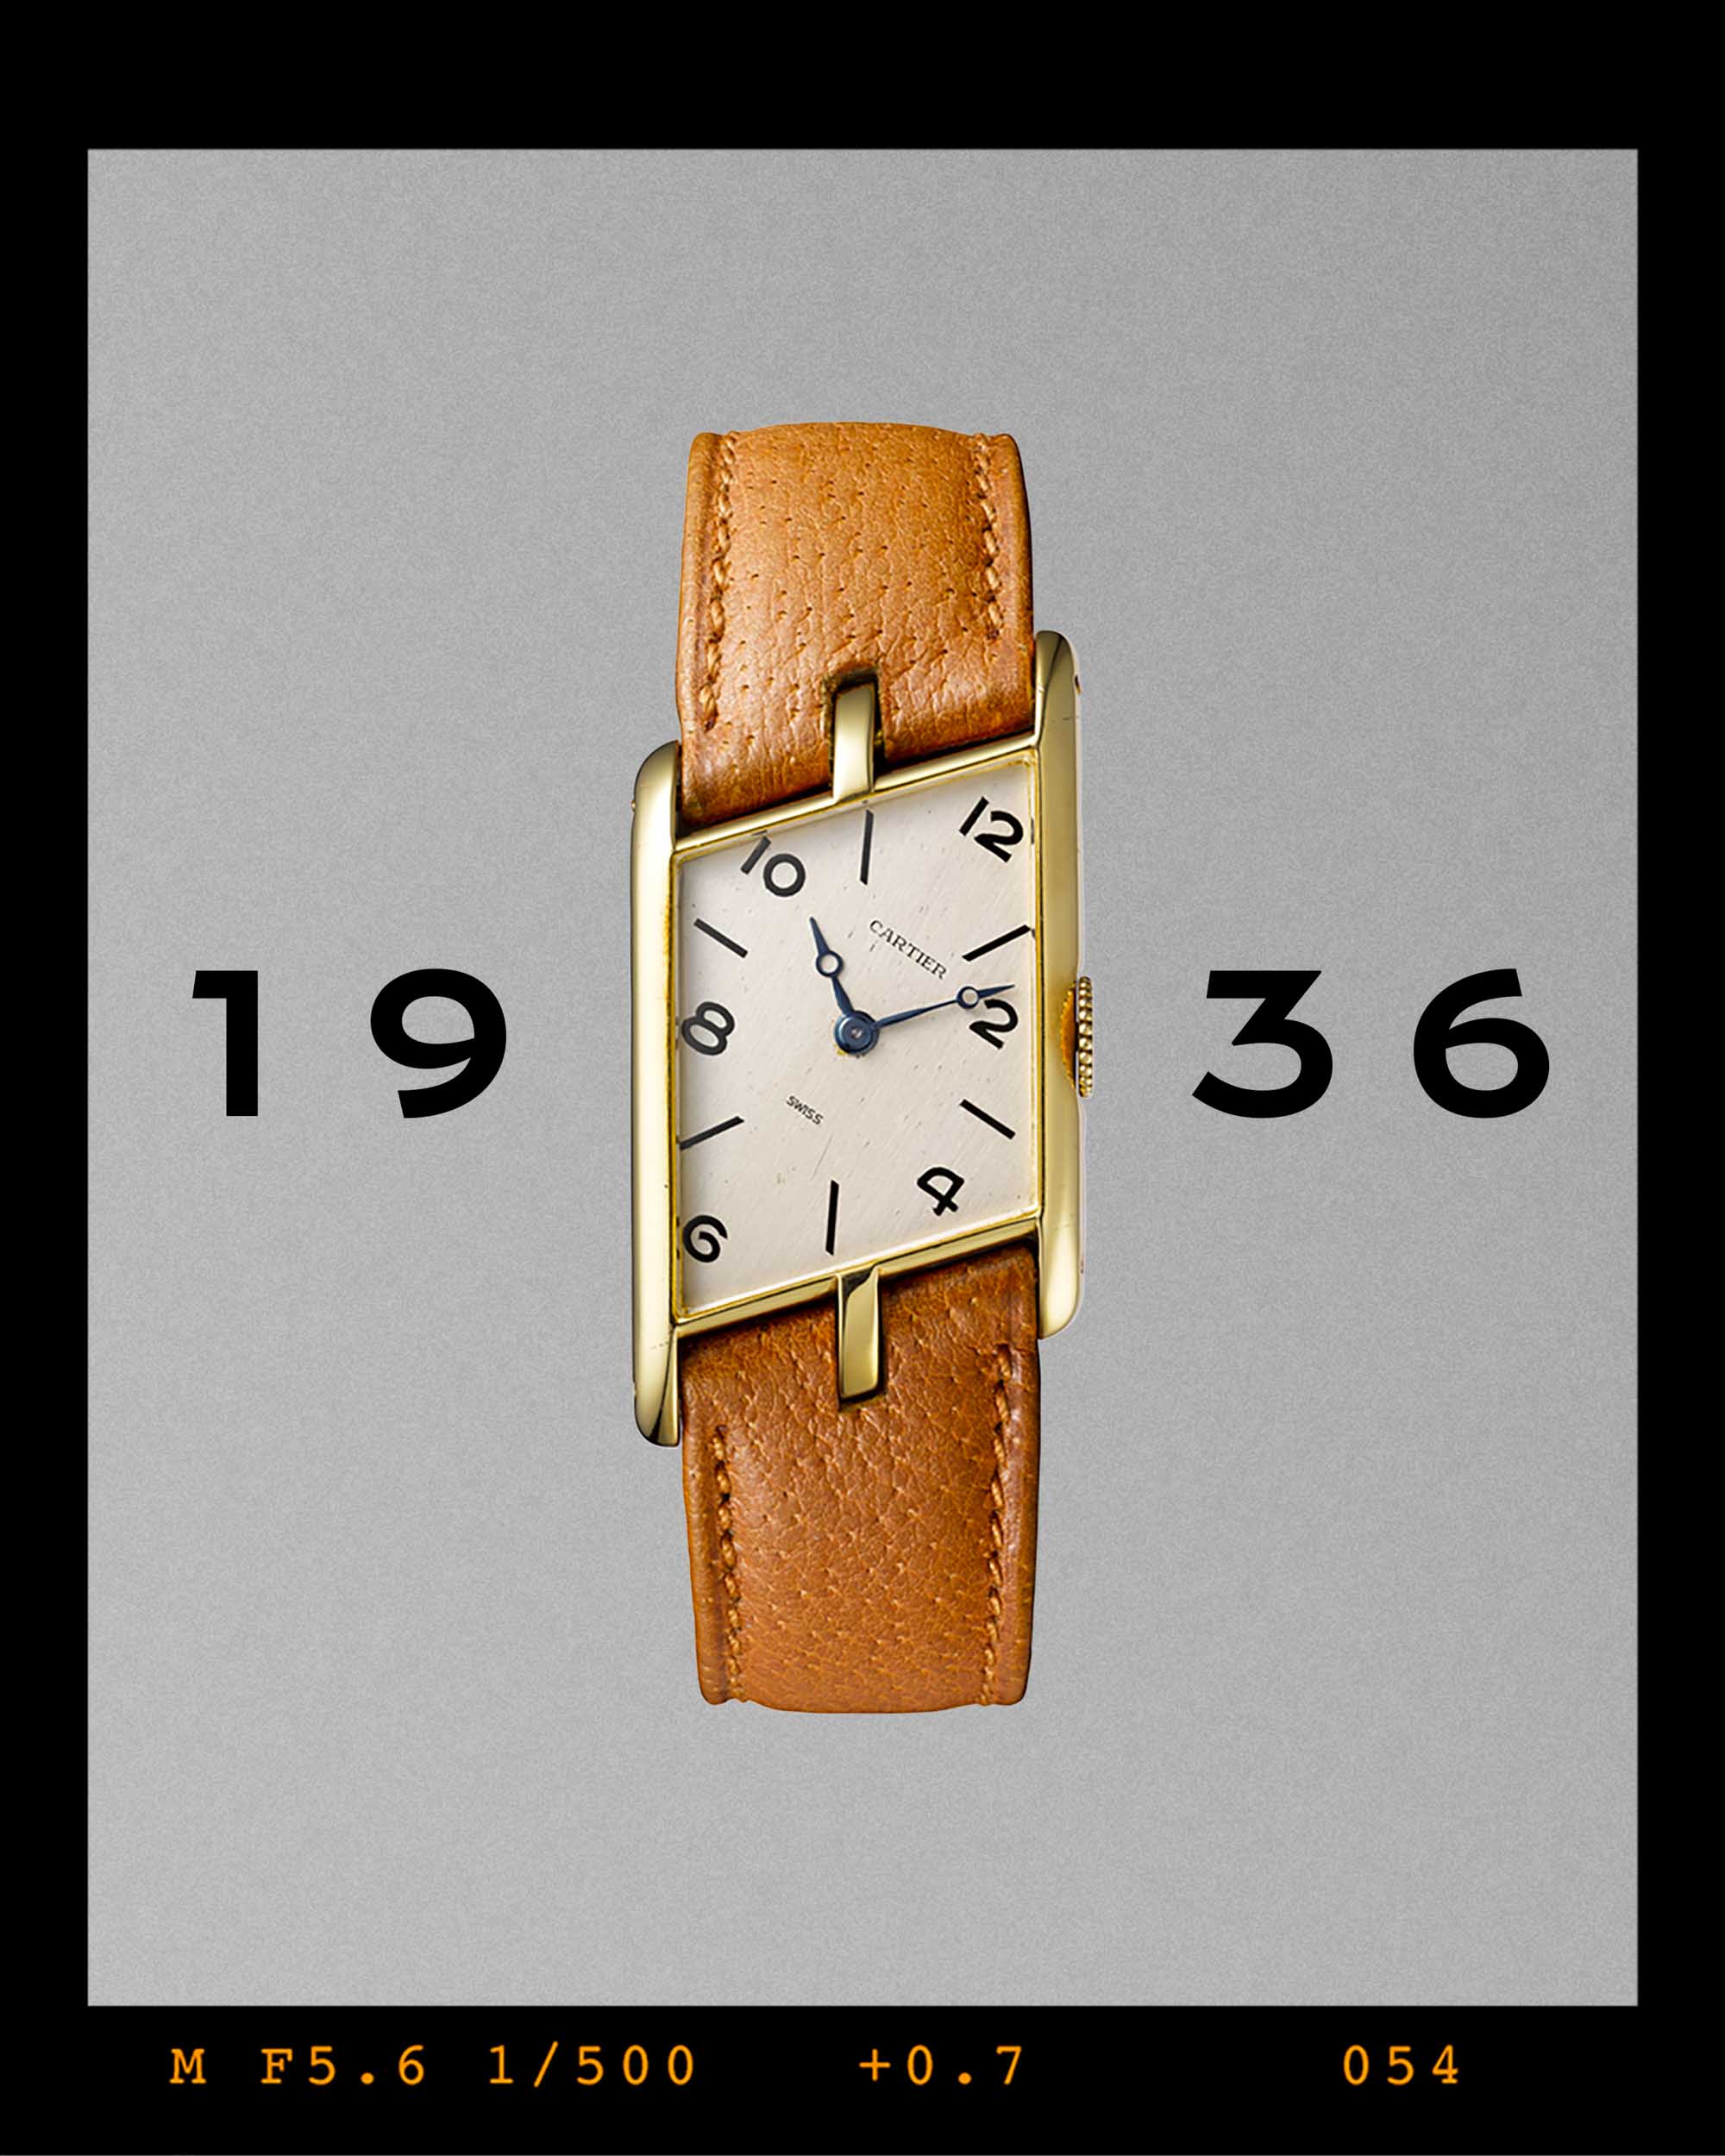 Cartier Tank Watch - The Hour Glass Official